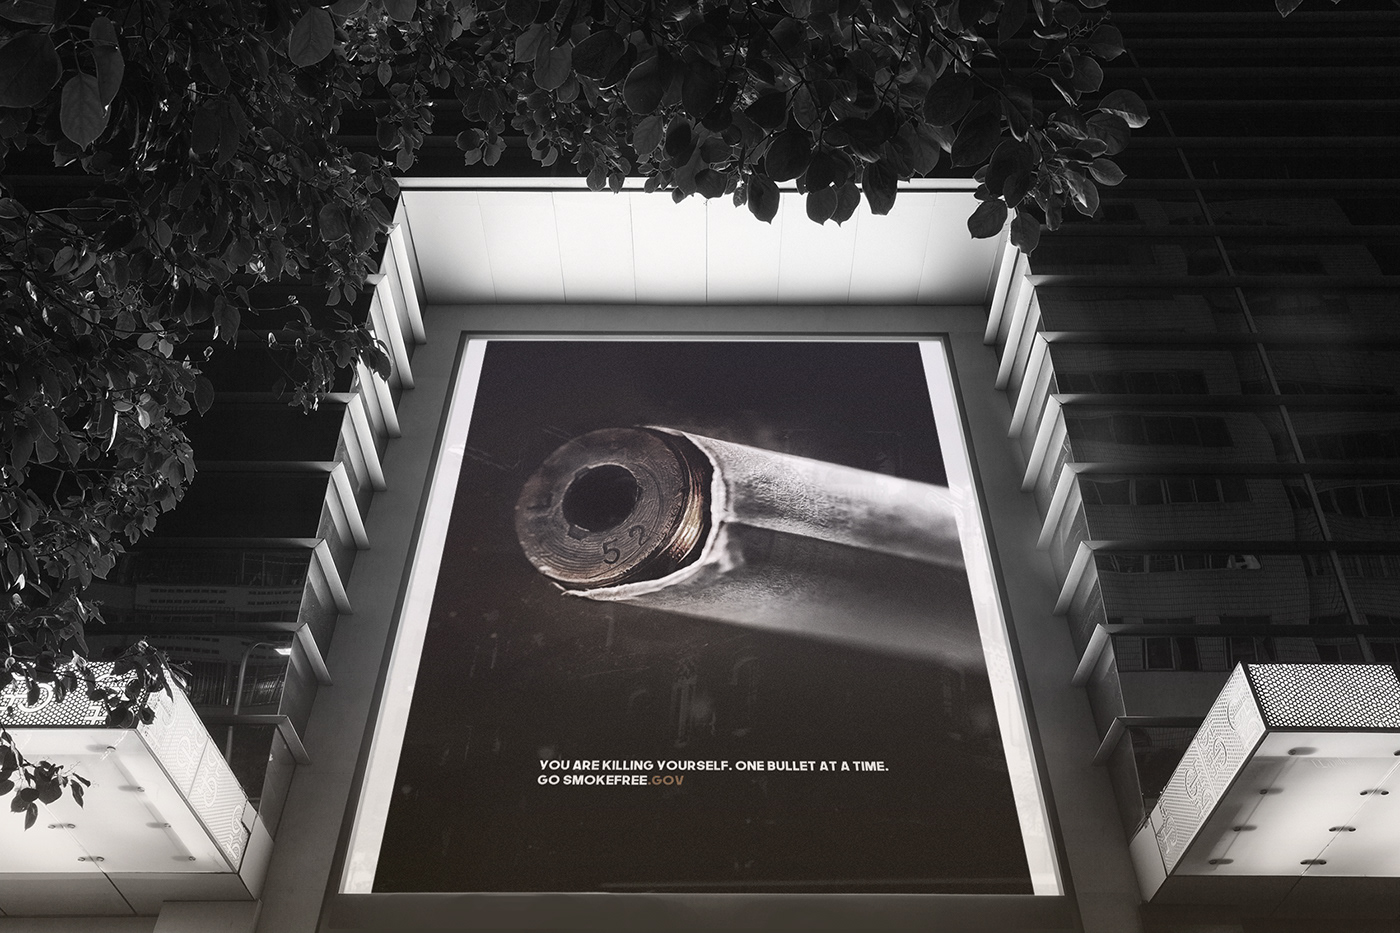 smoking inspire ad antismoking smokefree dontsmoke Bullet social responsibility campaign